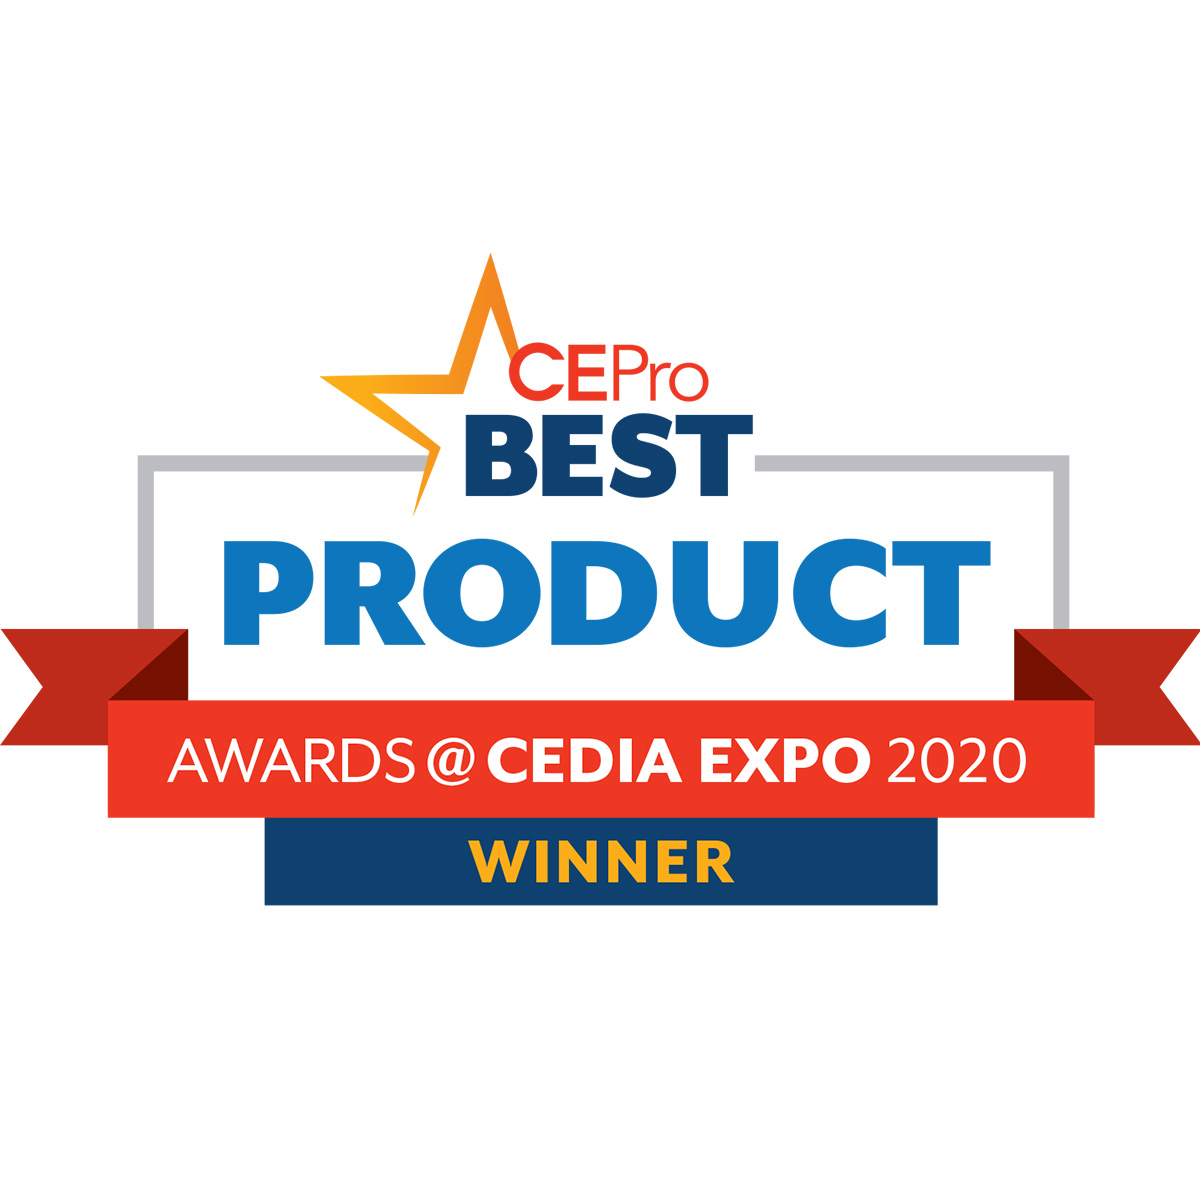 CE Pro Best Product Awards 